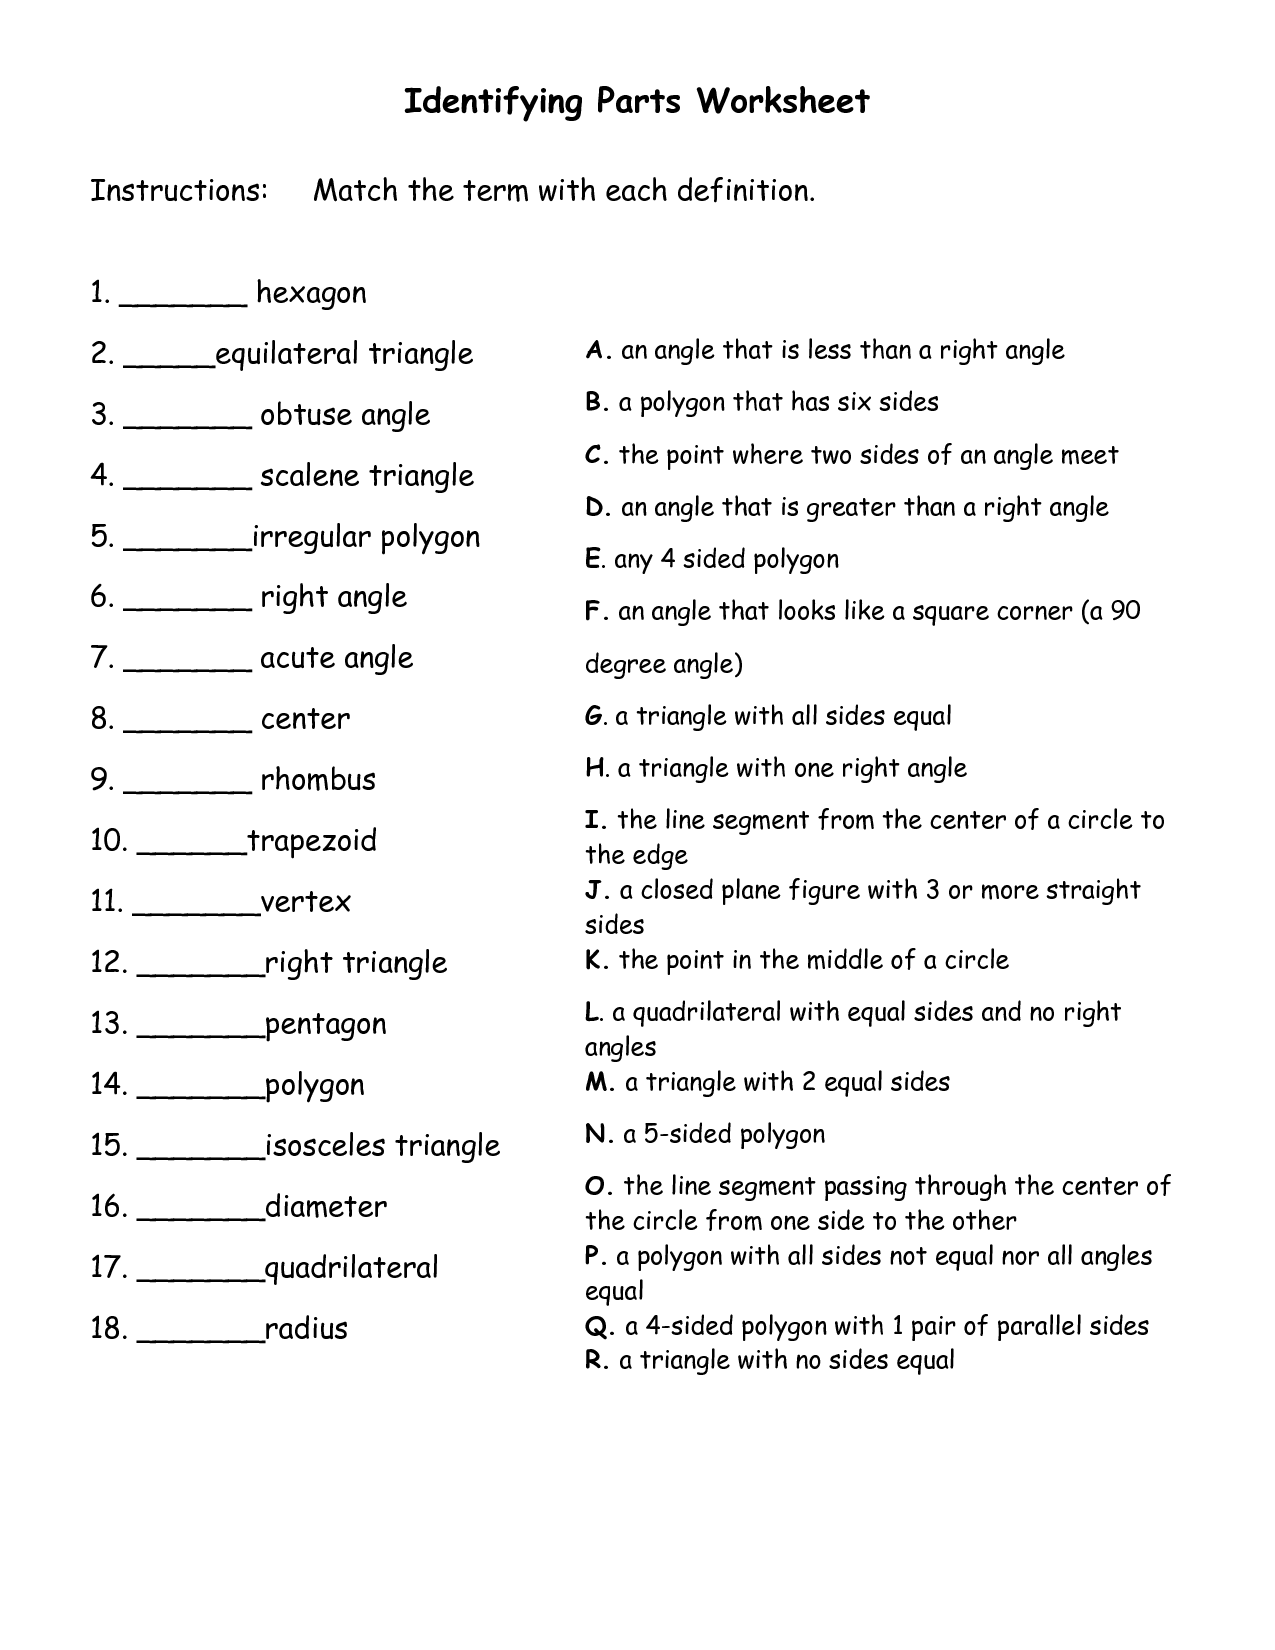 worksheet on identifying parts of speech